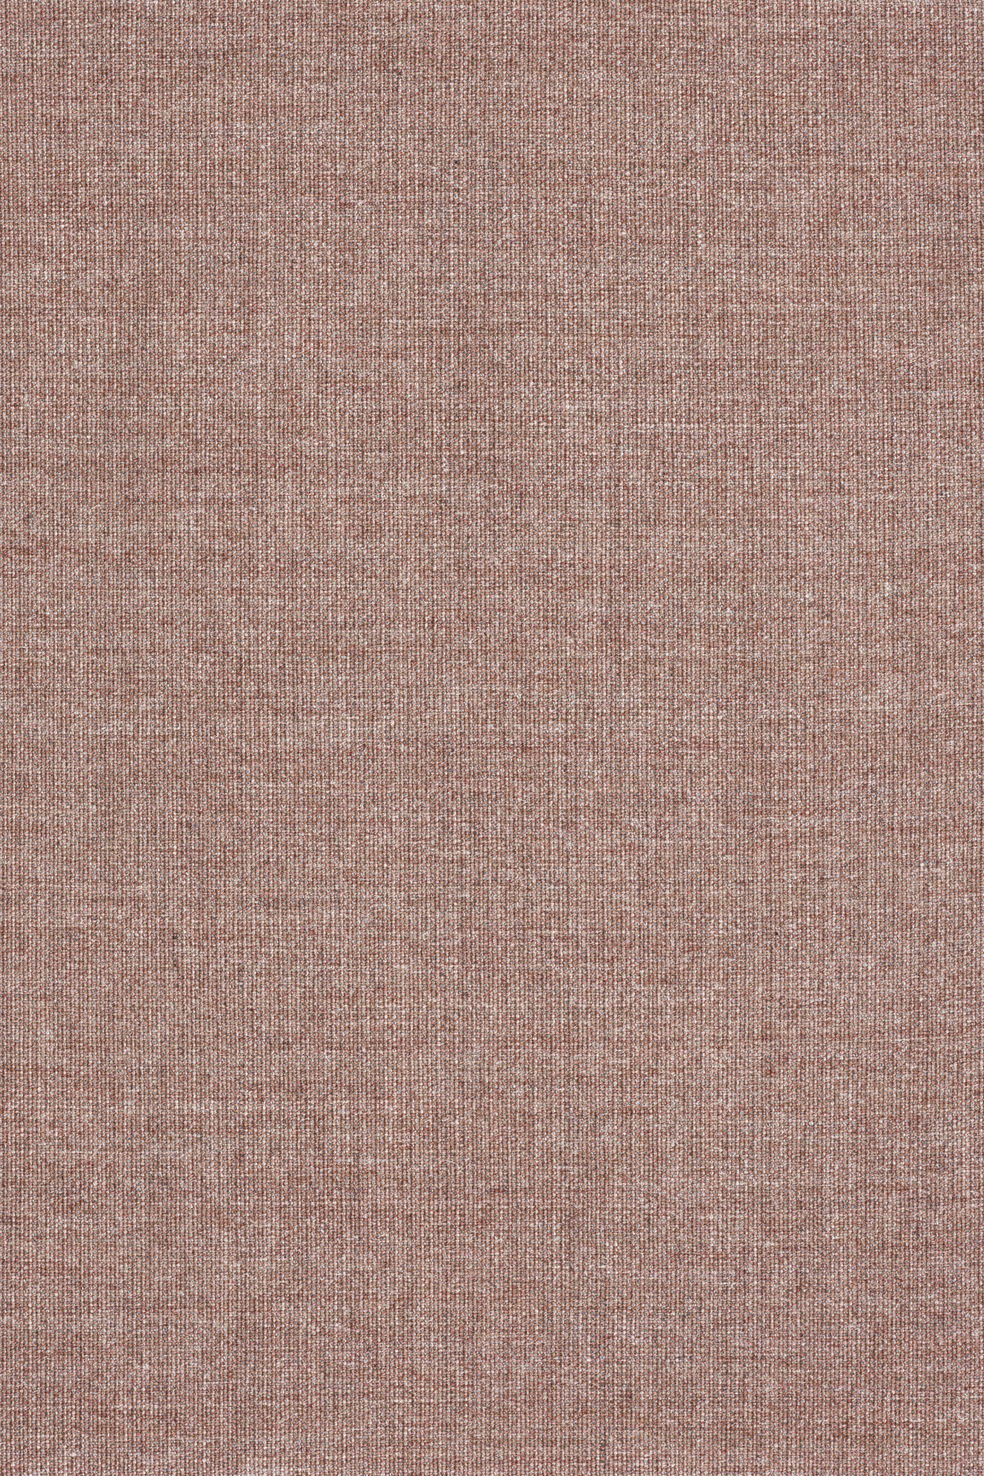 Fabric sample Canvas 2 356 pink